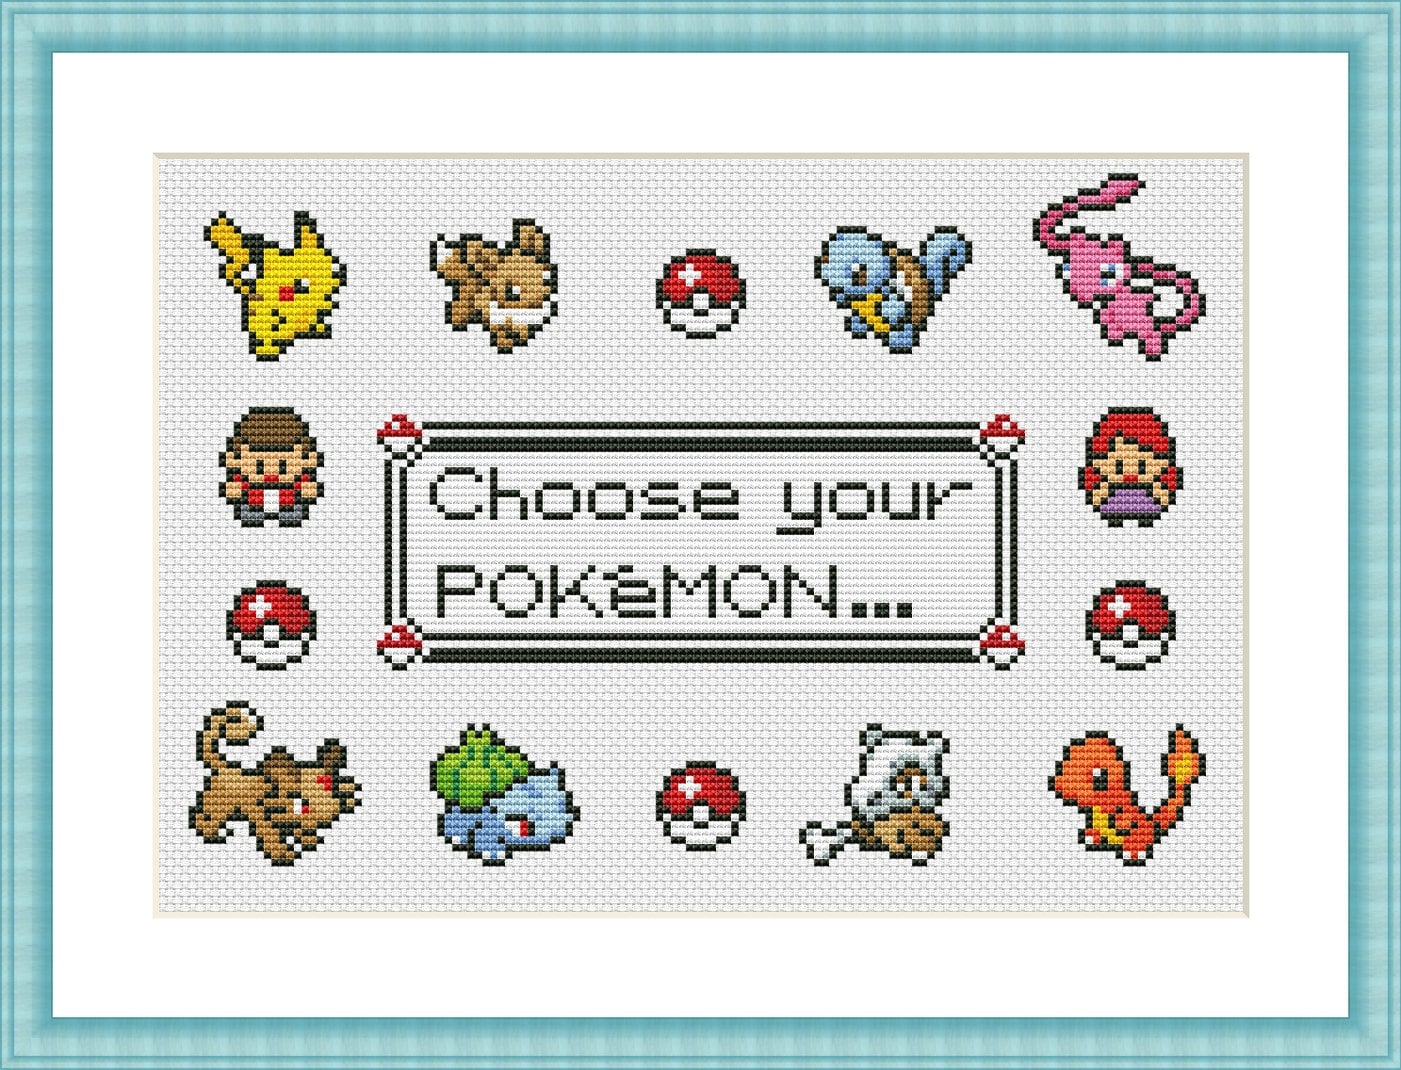 Pokémon Cross Stitch: Bring your favorite Pokémon to life with